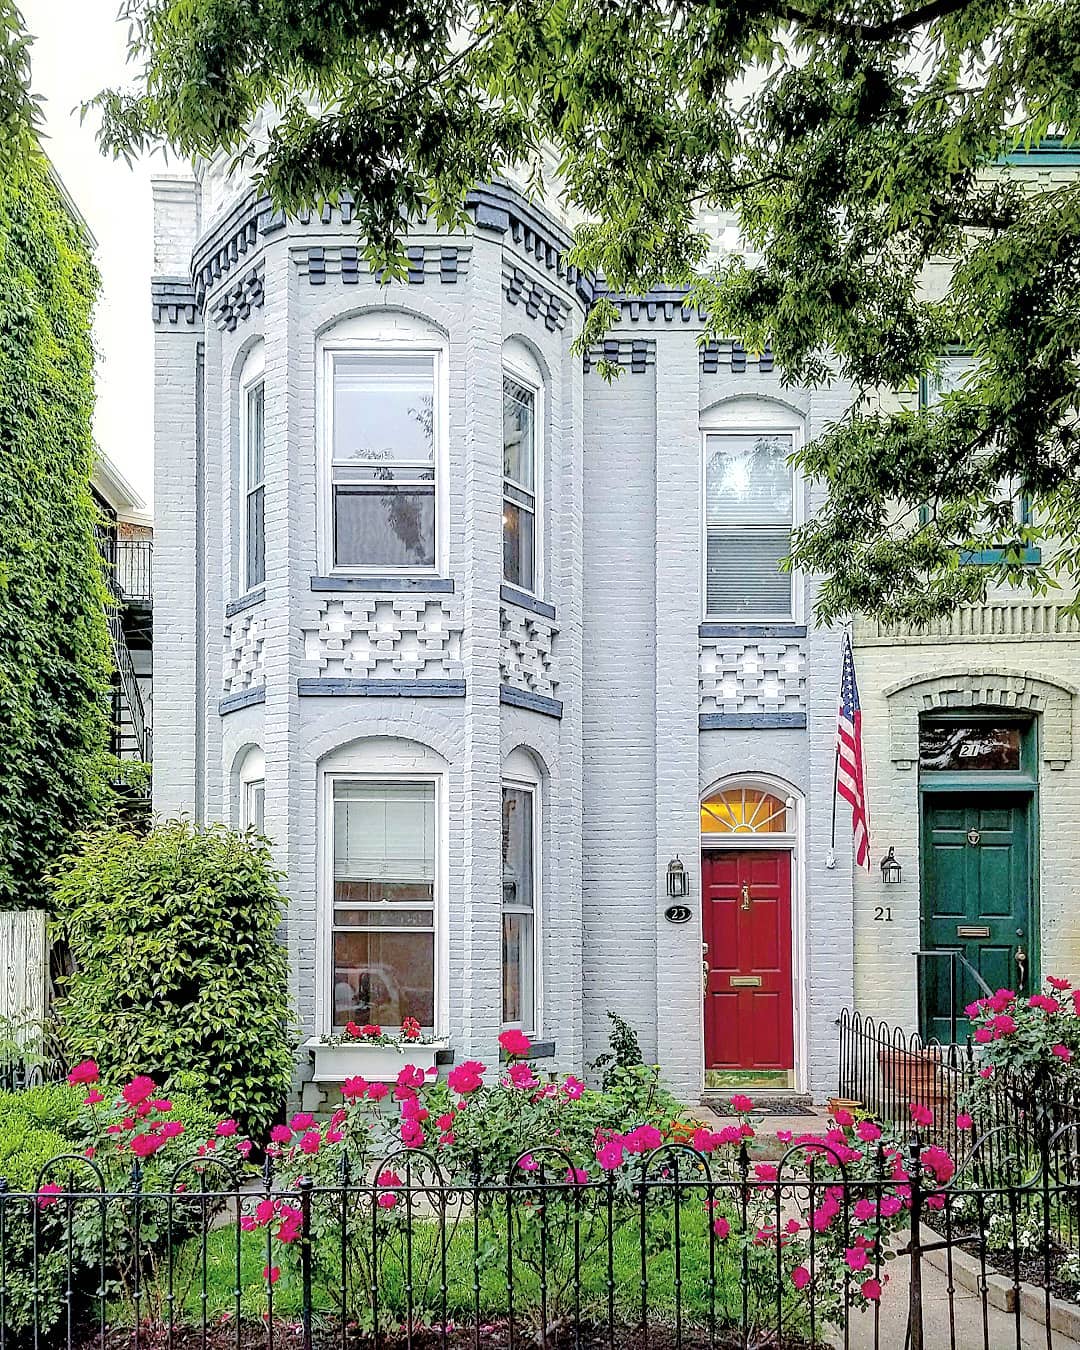 Rowhouse in Capitol Hill Neighborhood, Washington, DC. Photo by Instagram user @pharipedia.